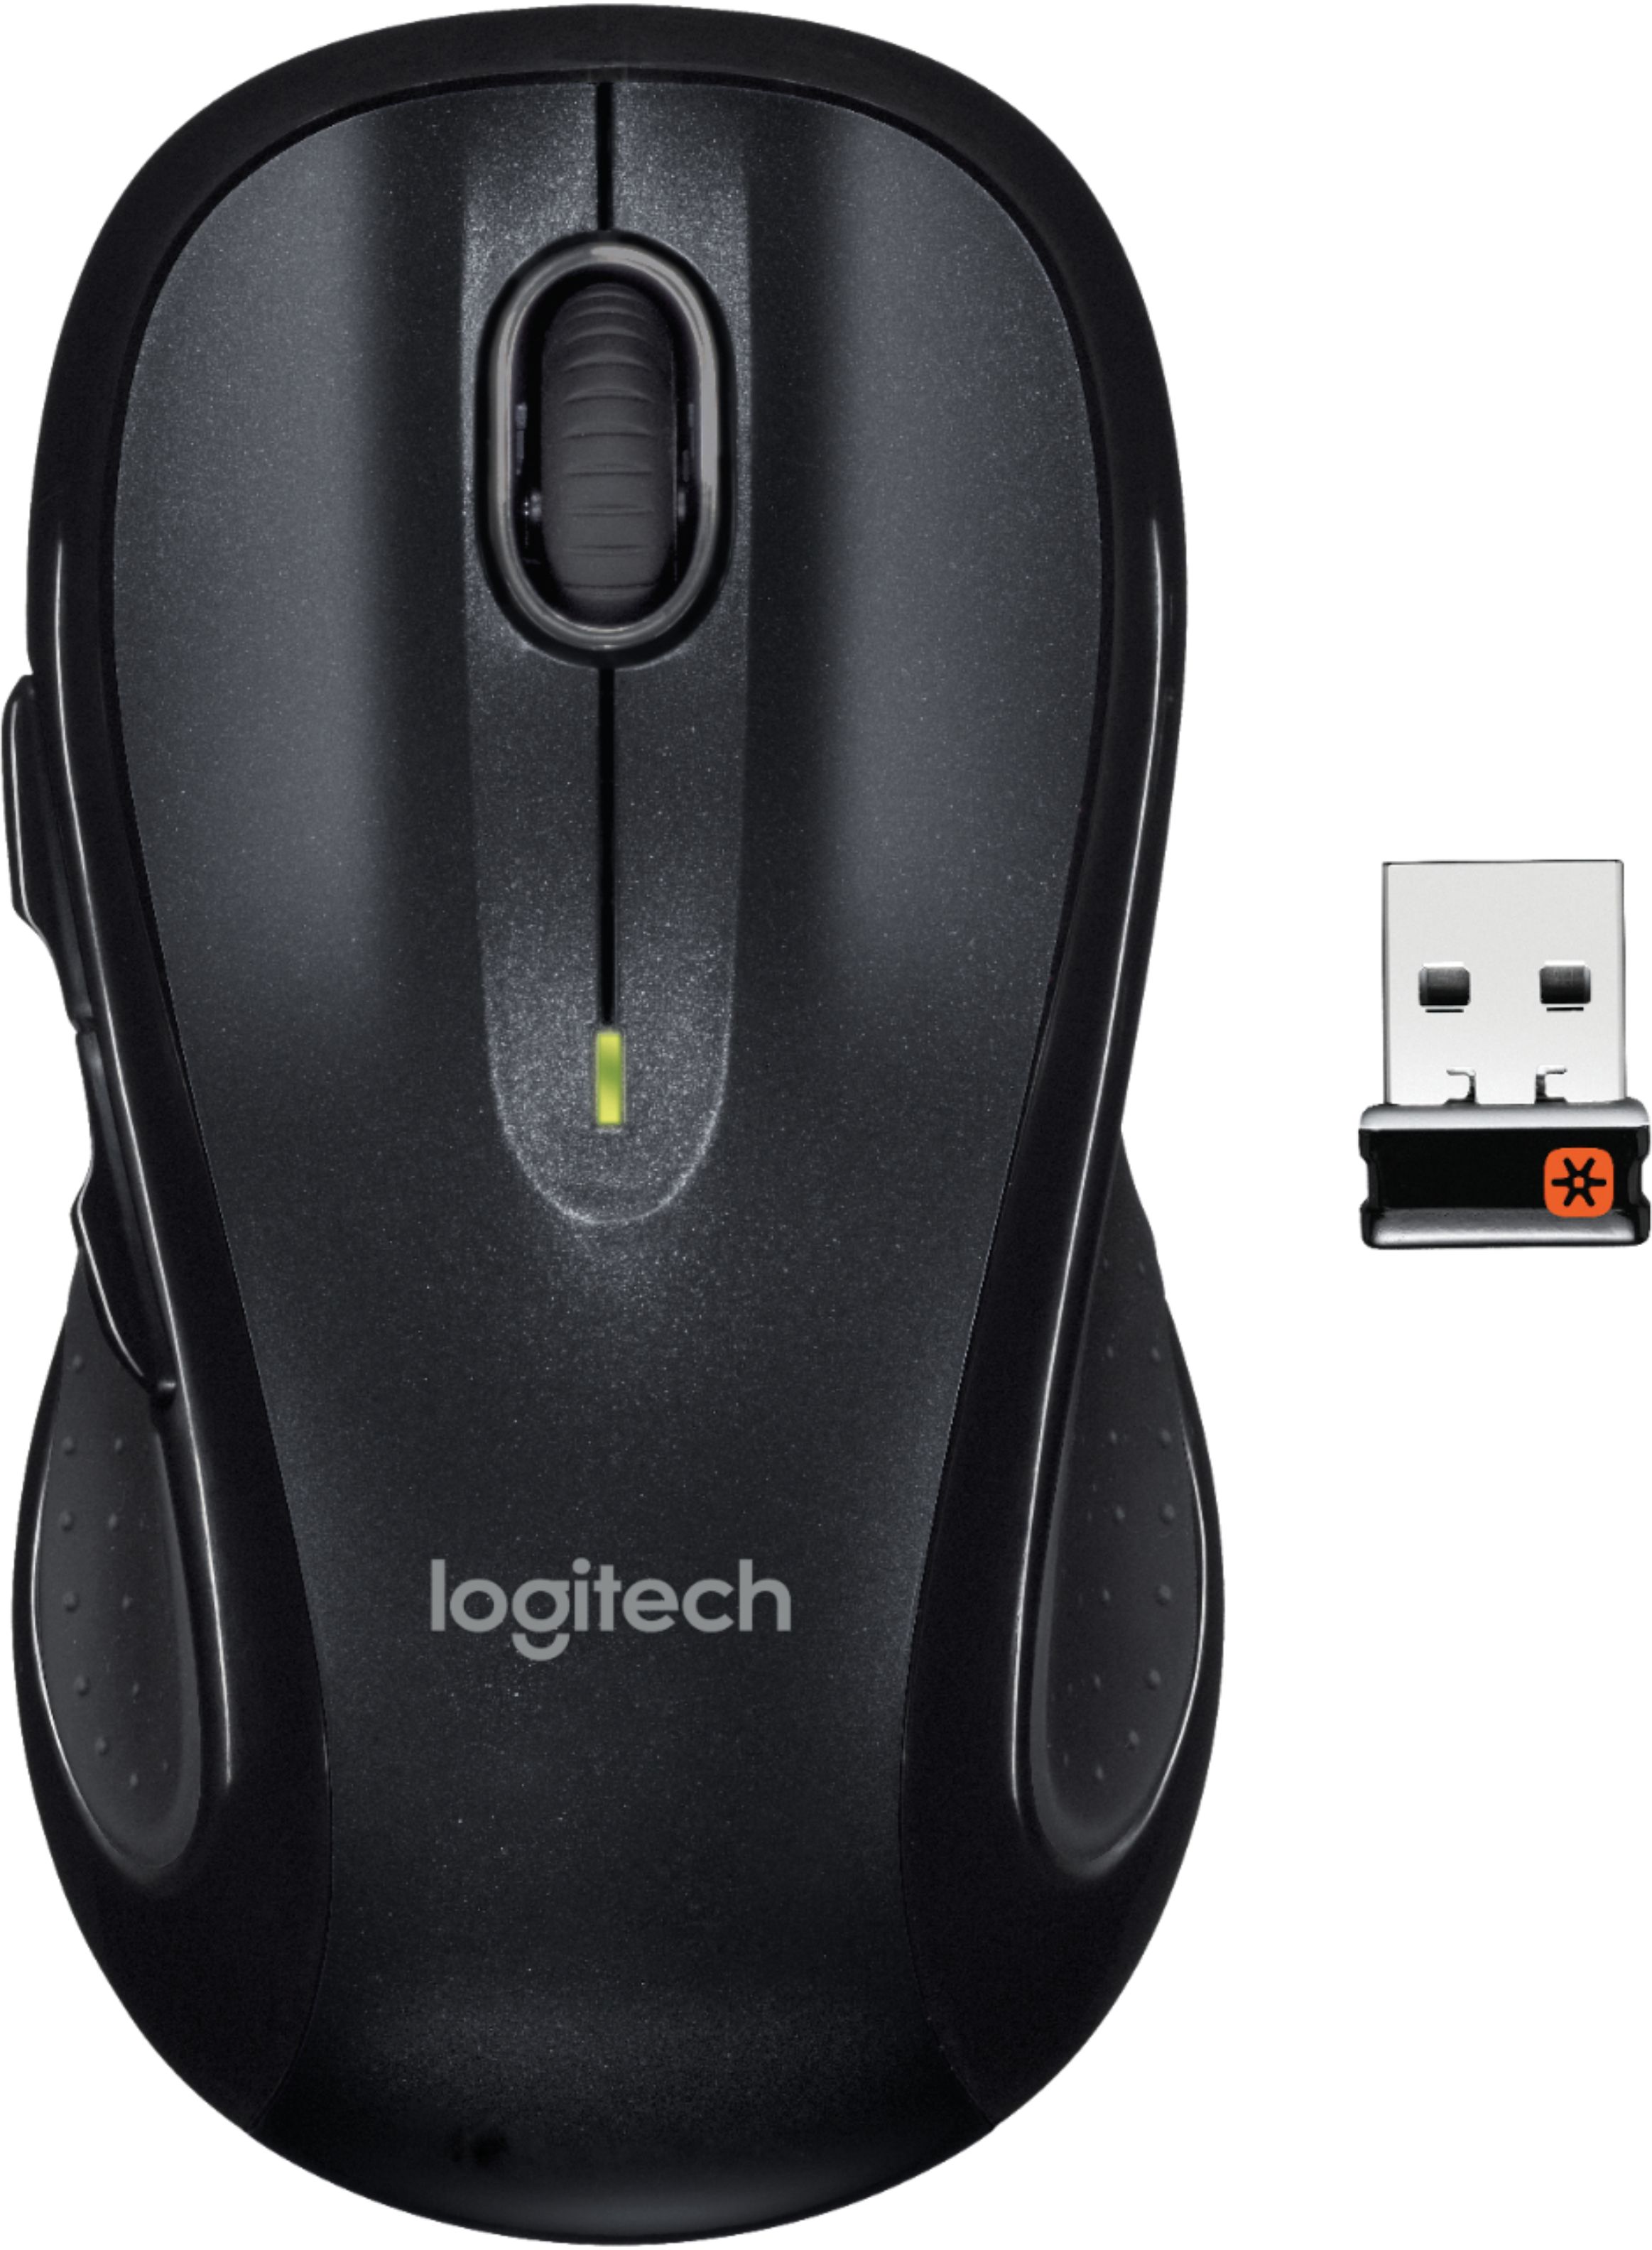 Logitech - M510 Wireless Laser Mouse - Silver/Black